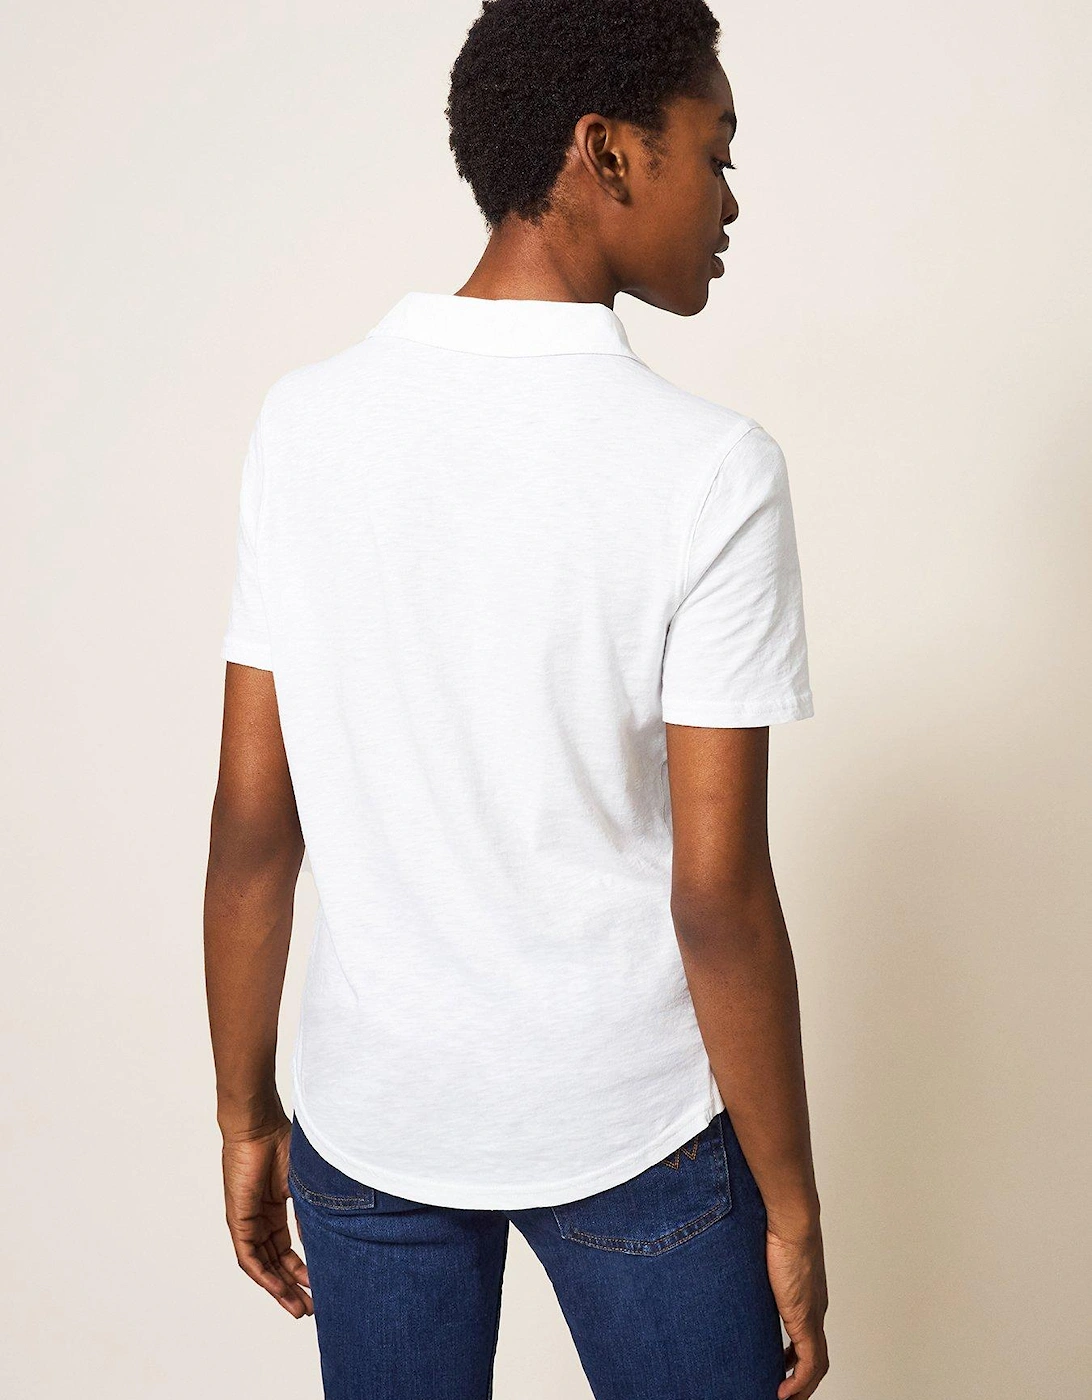 Penny Pocket Jersey Shirt - White